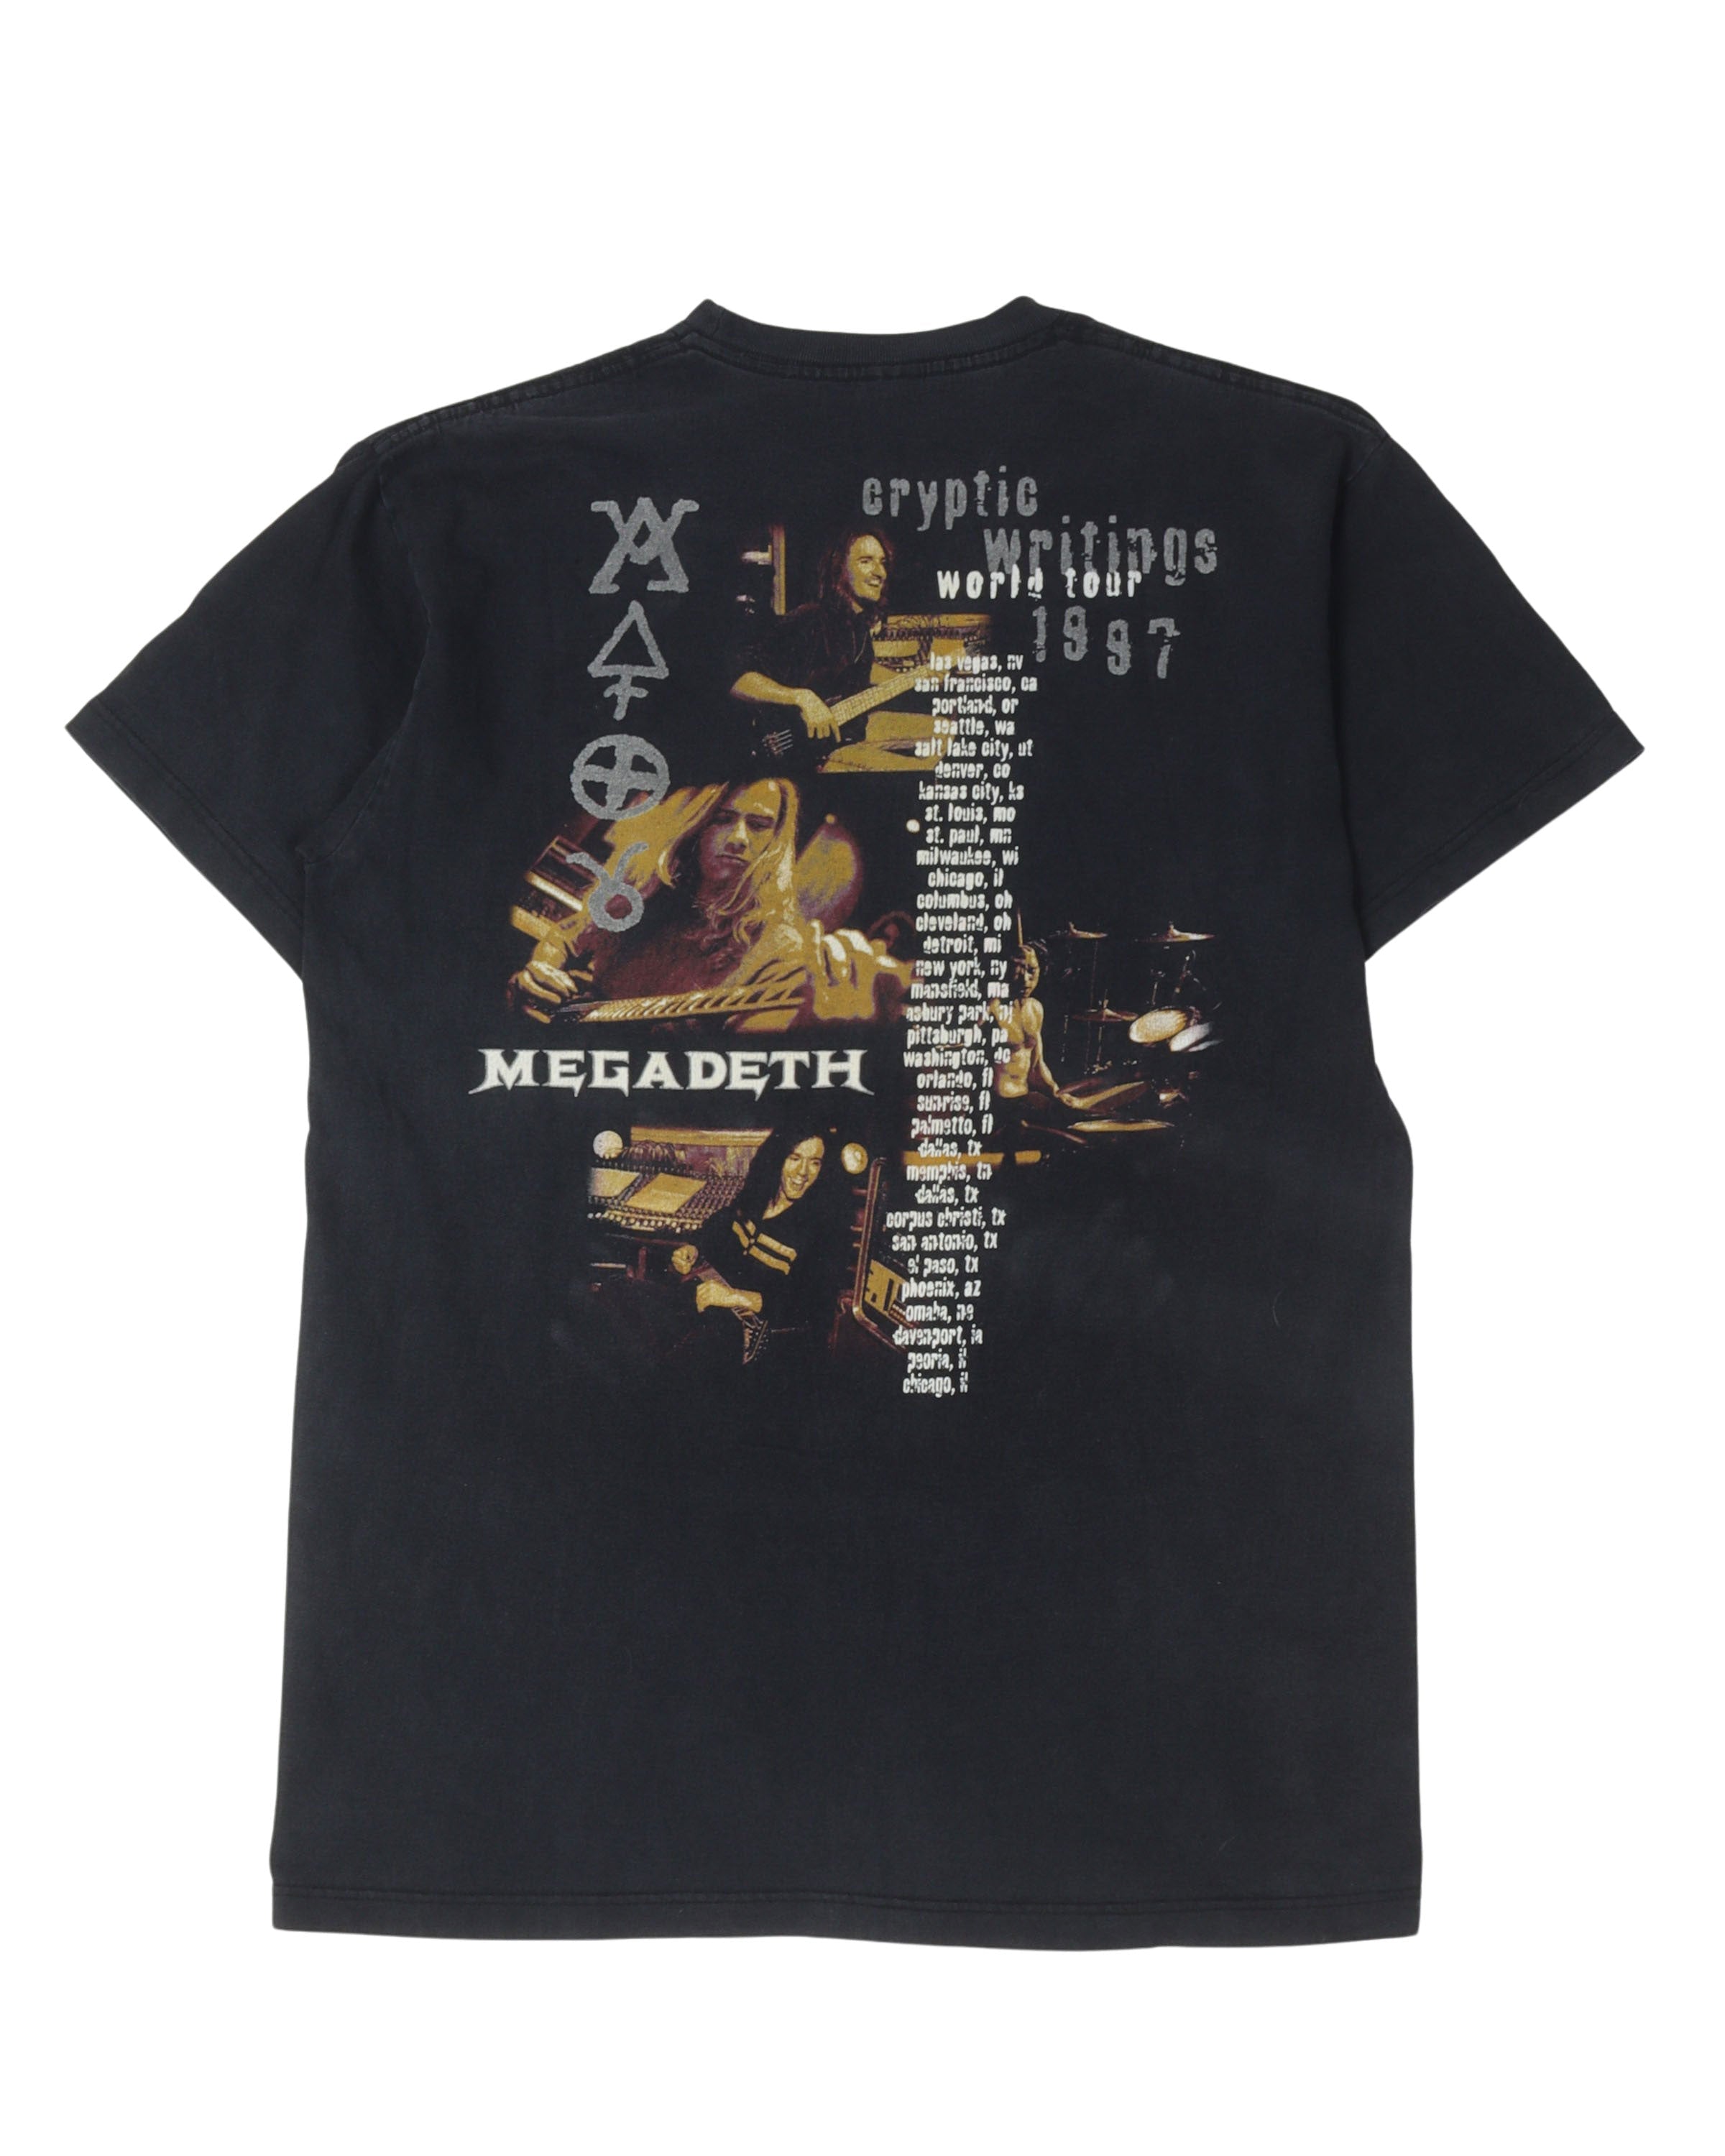 Megadeth "Cryptic Writings" World Tour 1997 T-Shirt